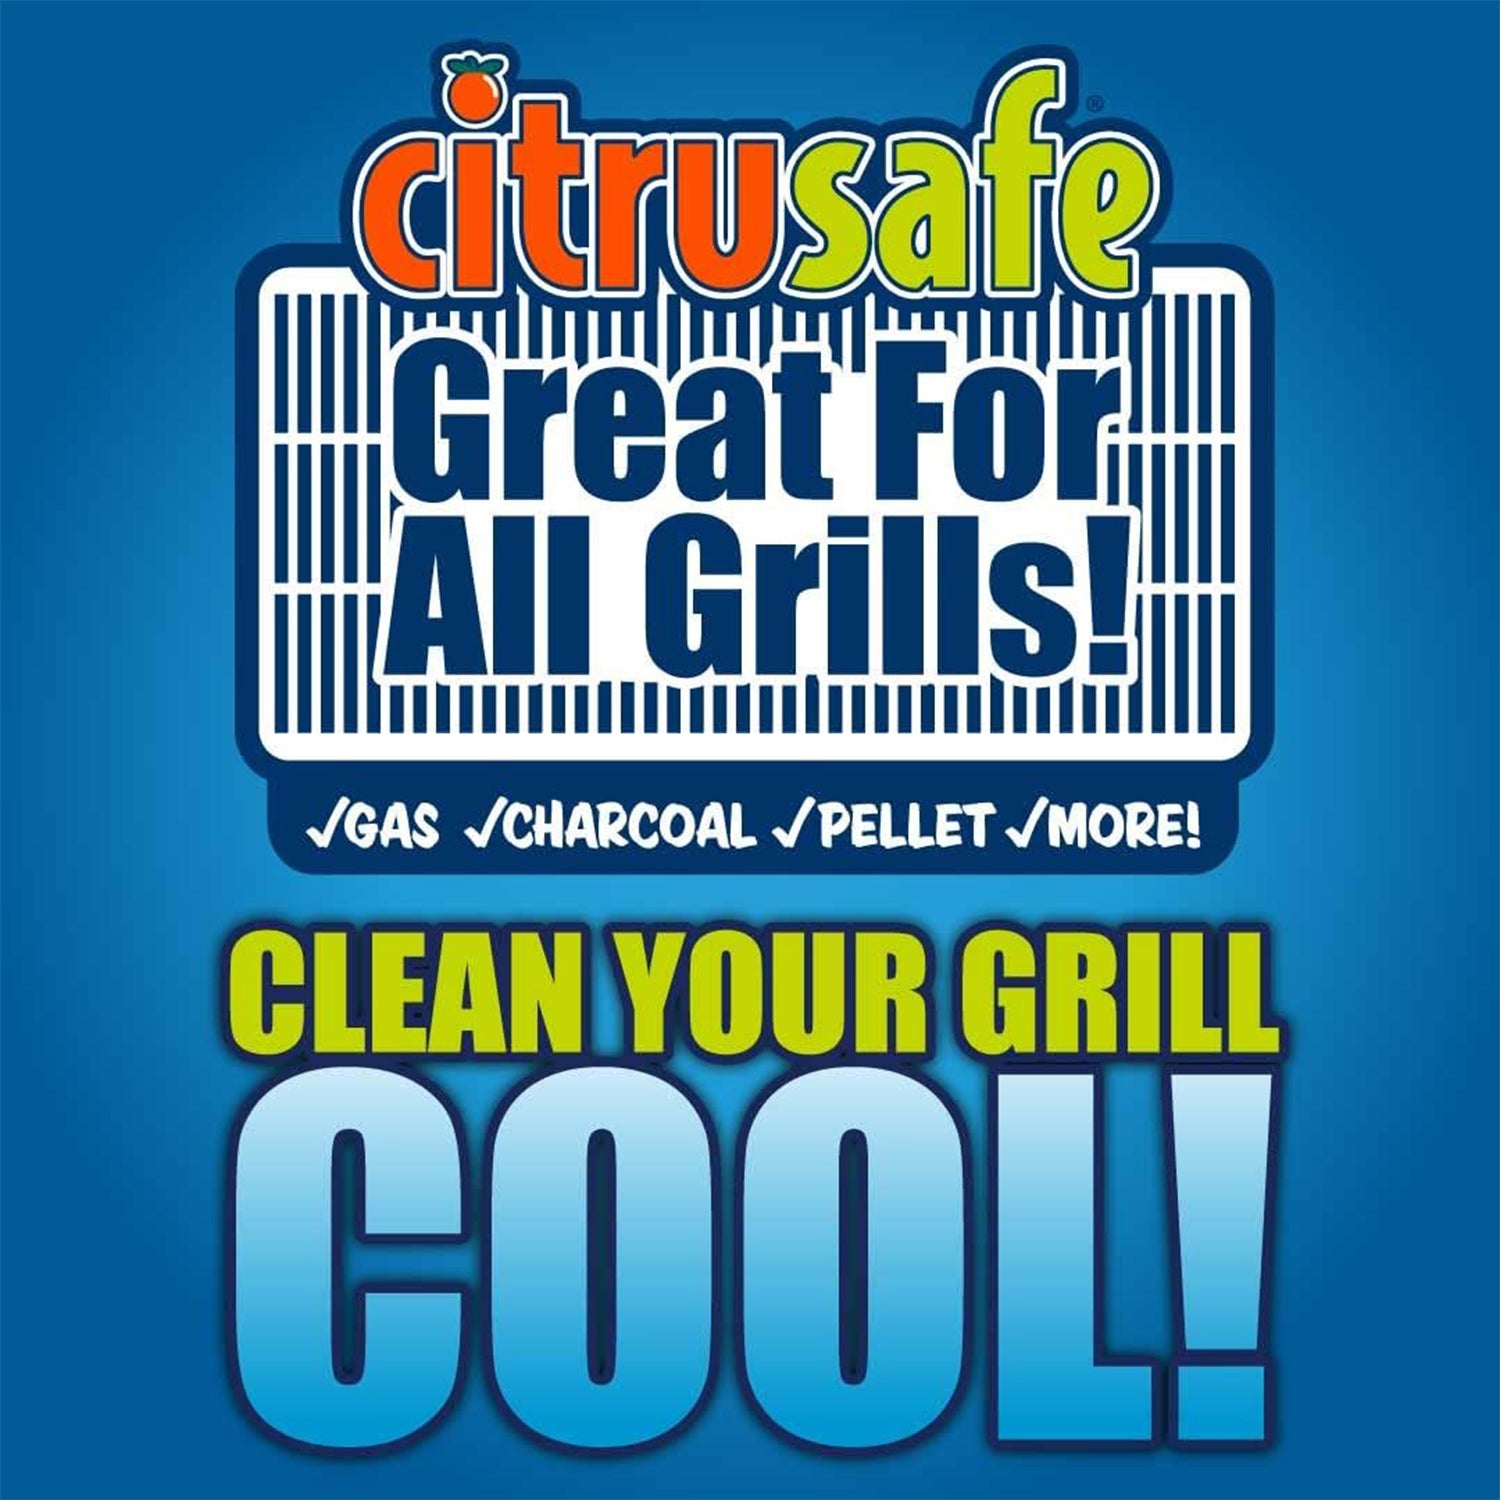 Citrusafe Exterior Grill Cleaning Spray Non-Toxic Safe Streak Free 16 Fl Oz